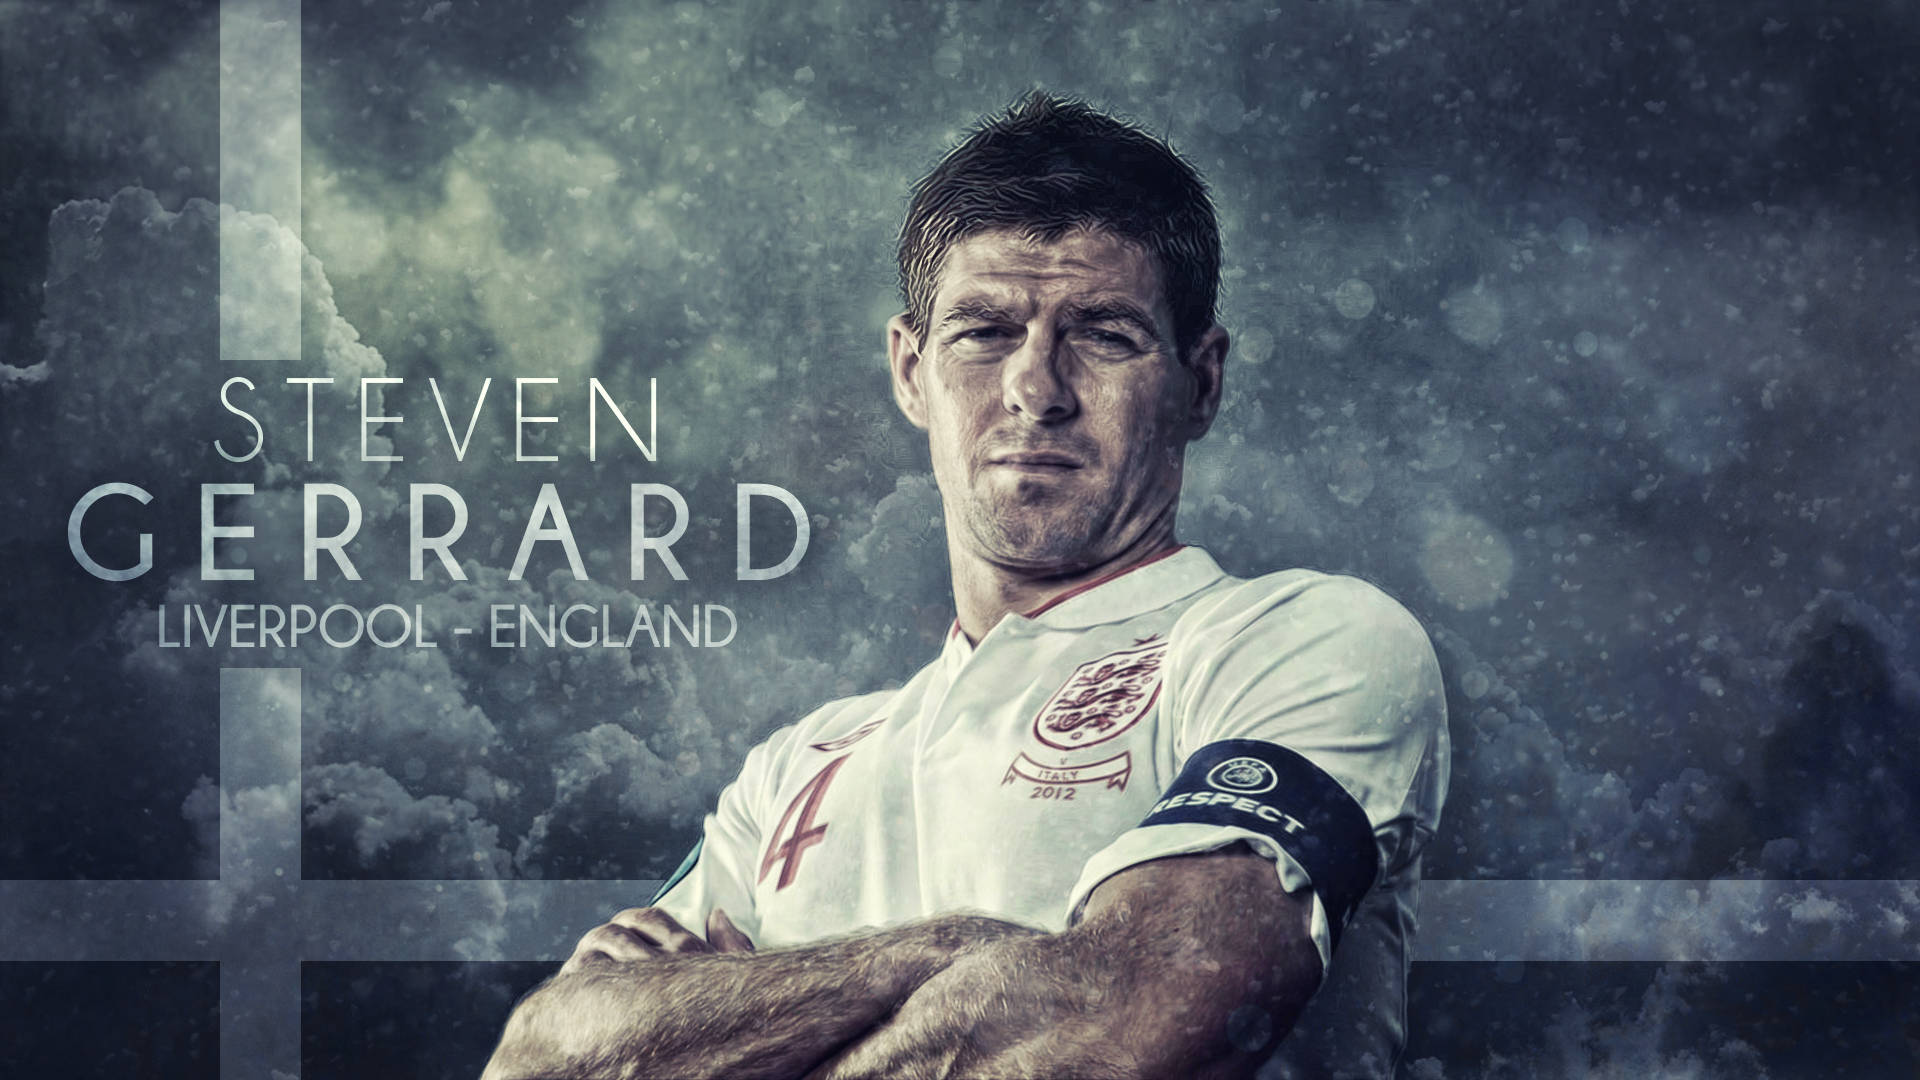 Steven Gerrard Liverpool Captain